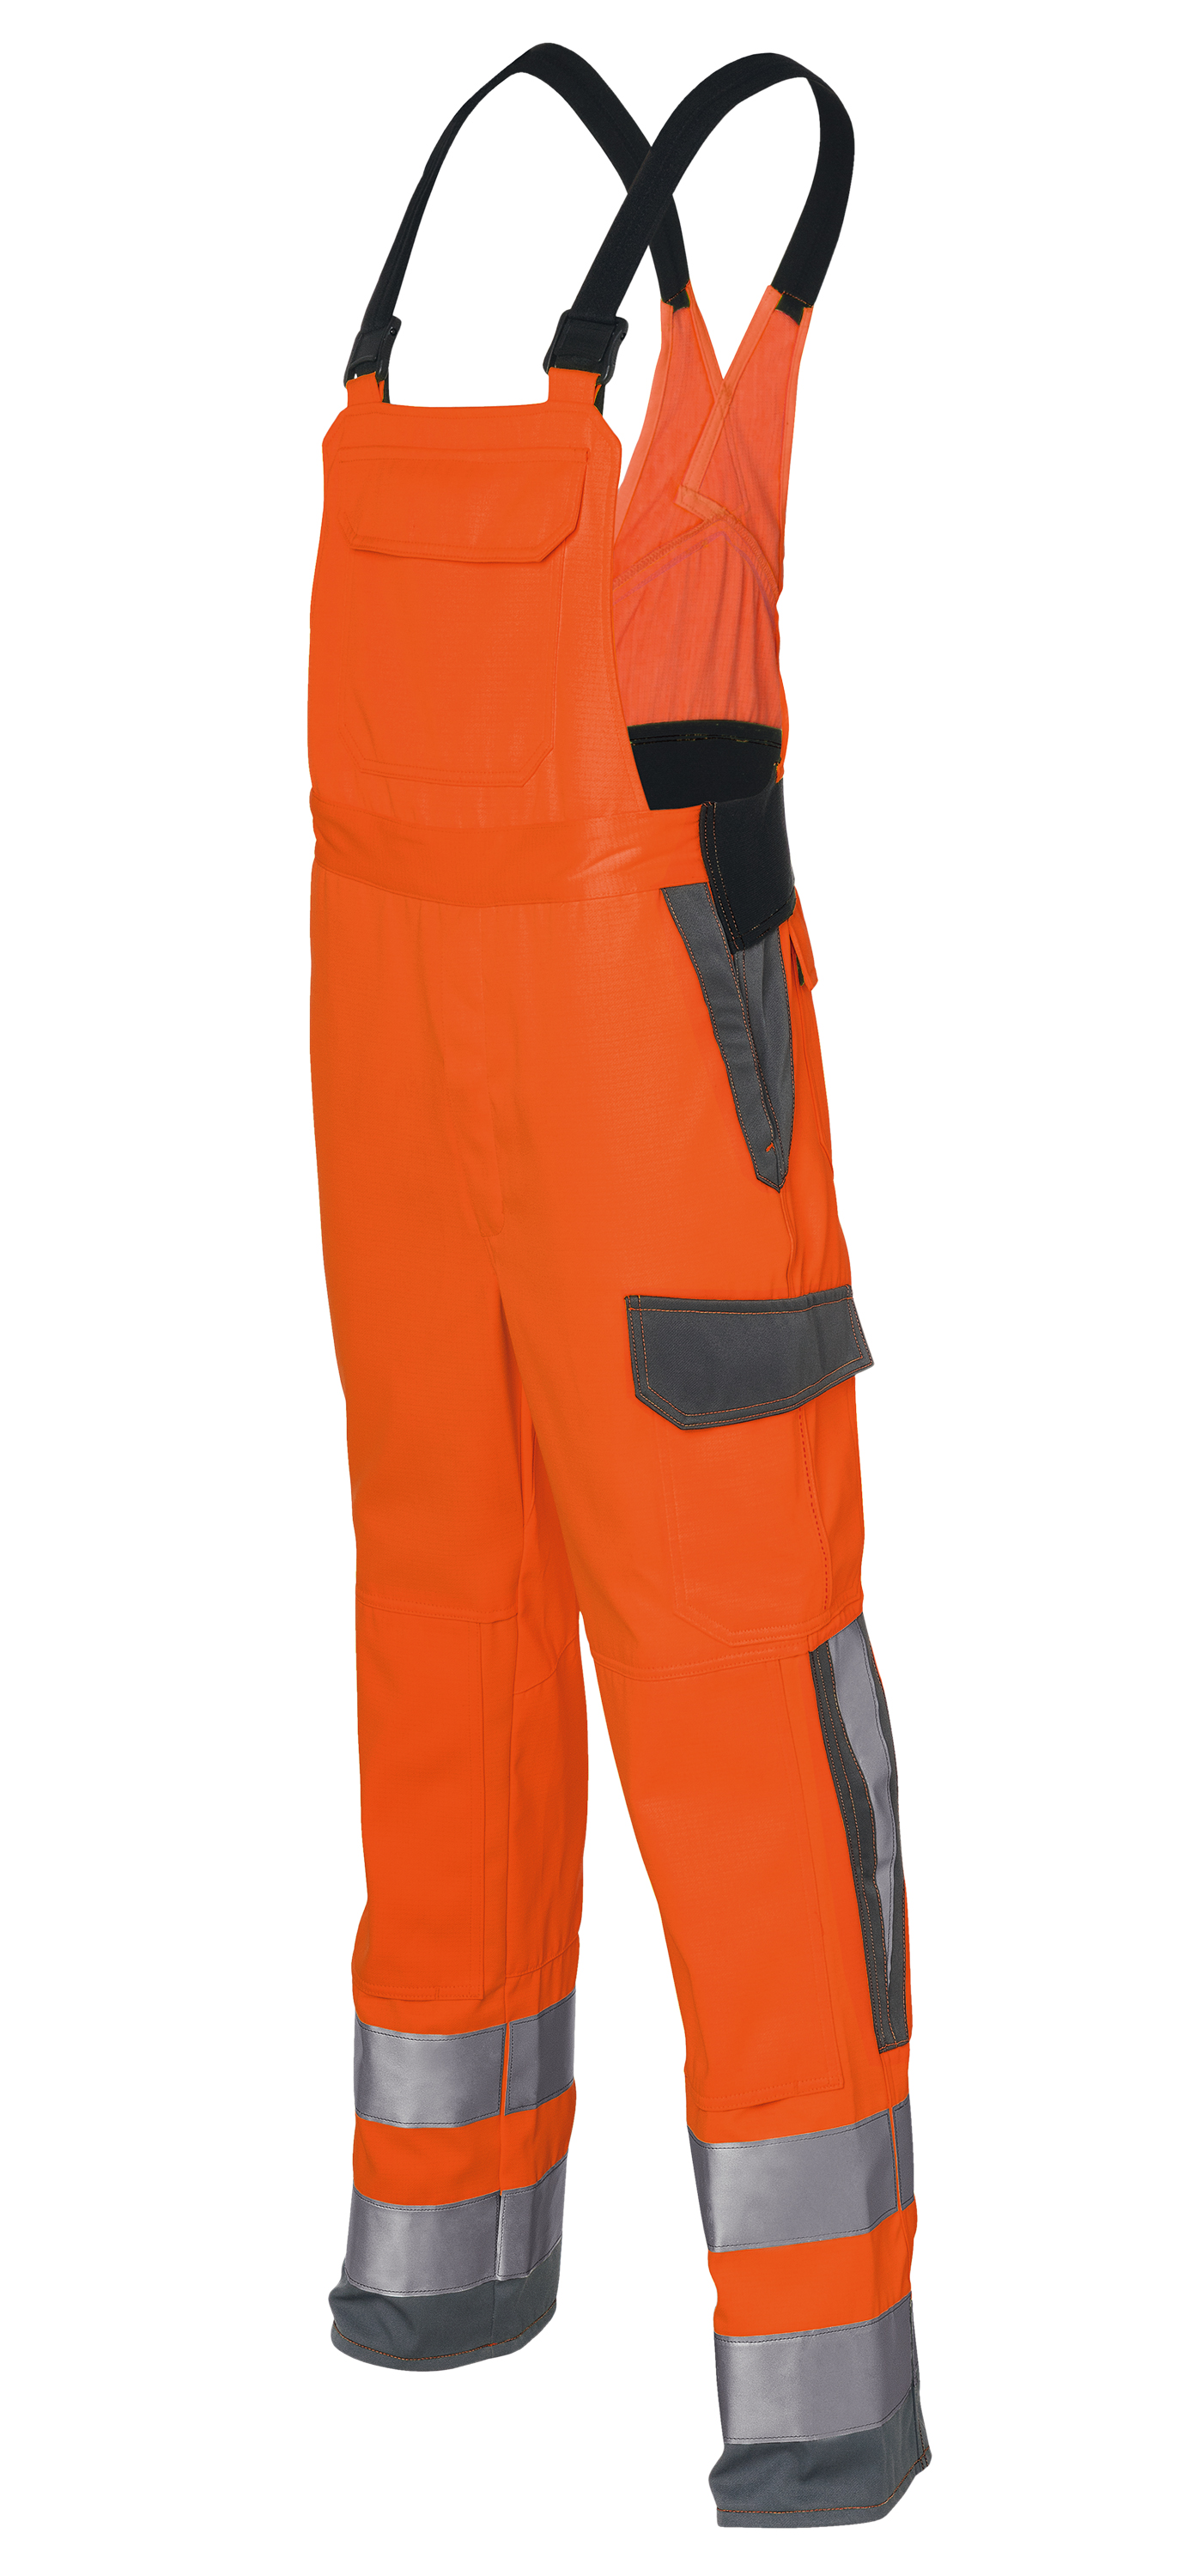 KÜBLER PROTECTIQ HIGH VIS spodnie ogrodniczki arc2 PPE 3